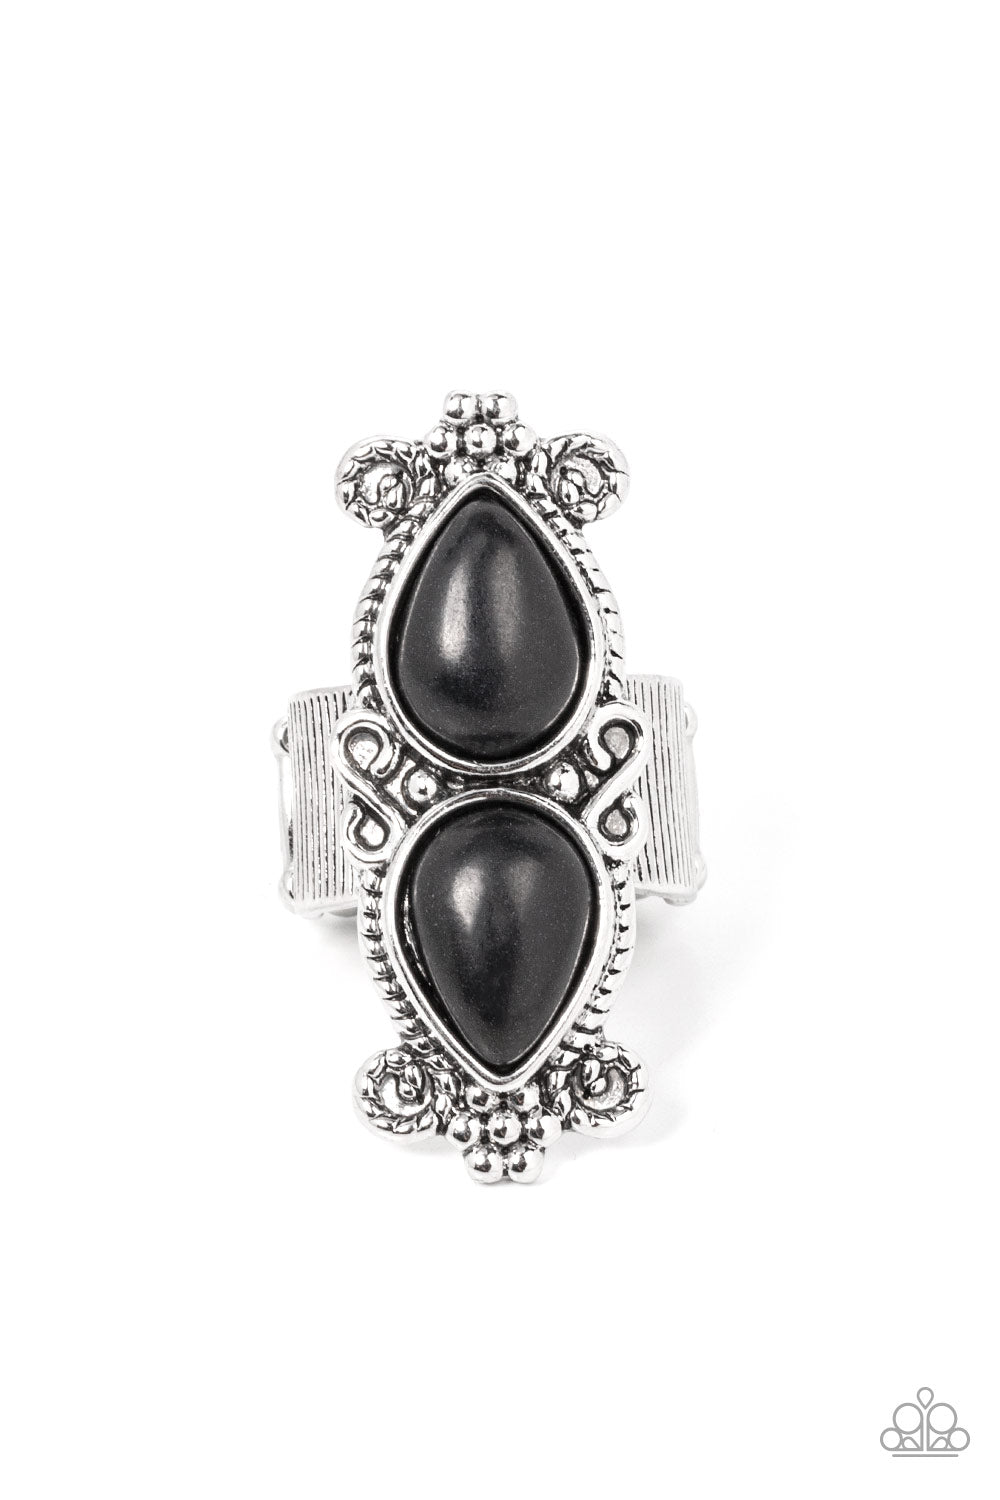 Adobe Garden Black Stone Ring - Paparazzi Accessories- lightbox - CarasShop.com - $5 Jewelry by Cara Jewels